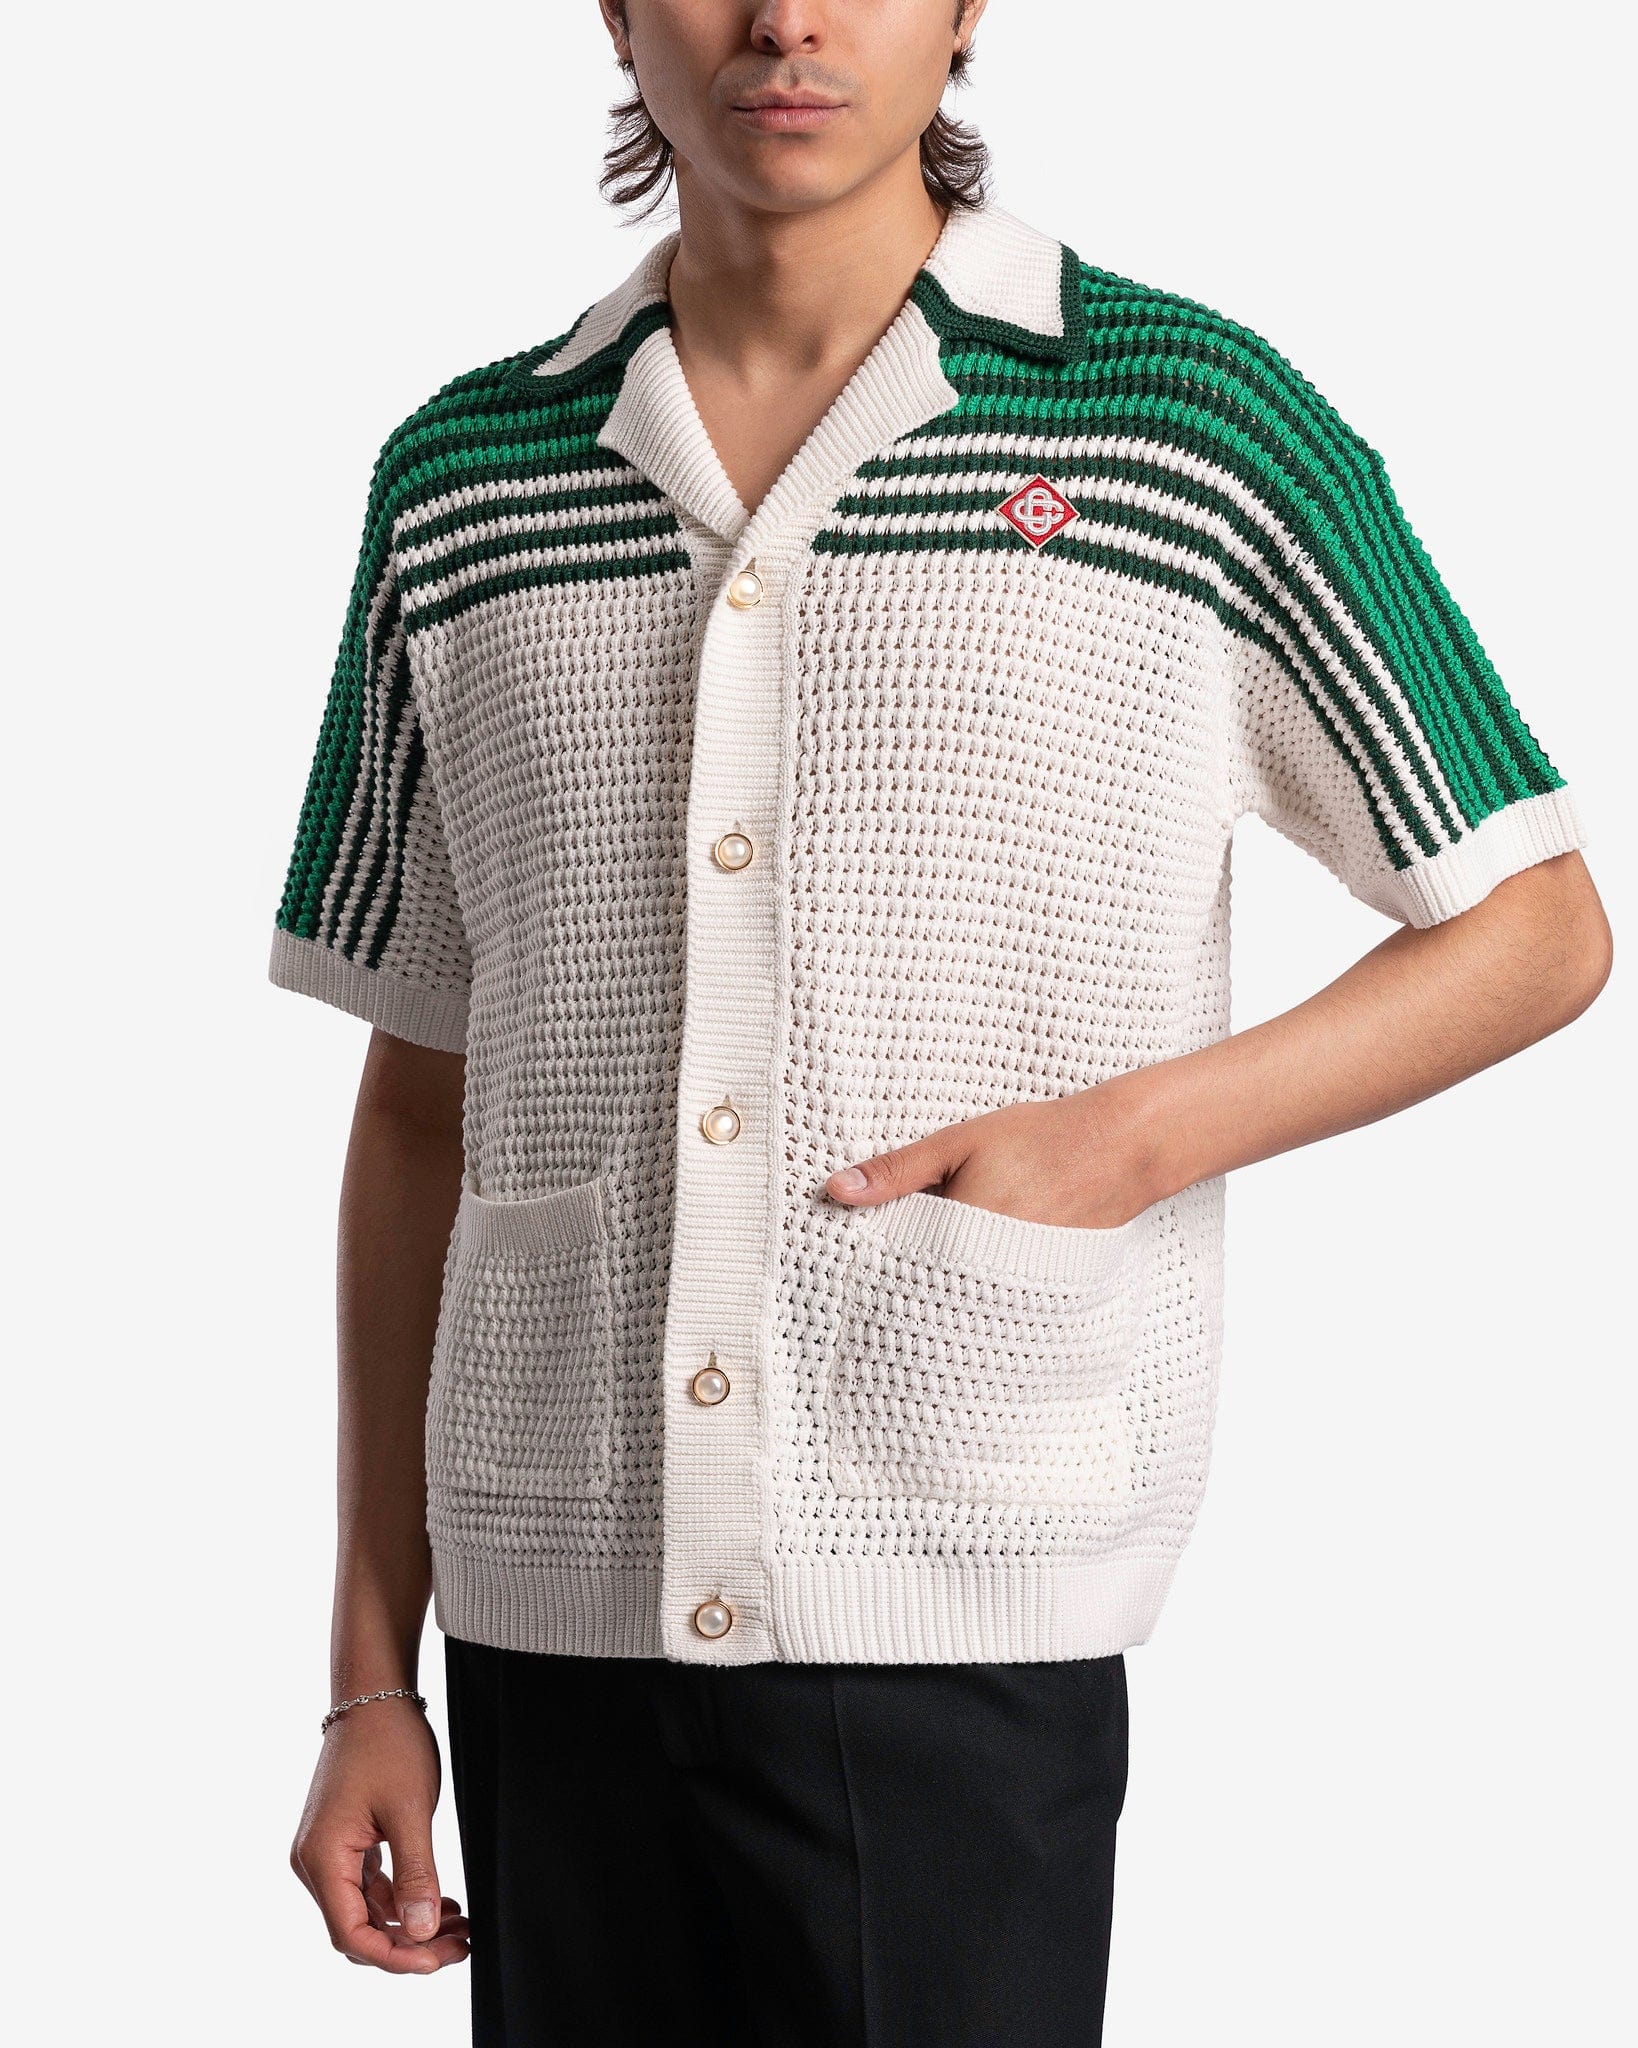 Casablanca Men's Shirts Tennis Crochet Shirt in Green/White